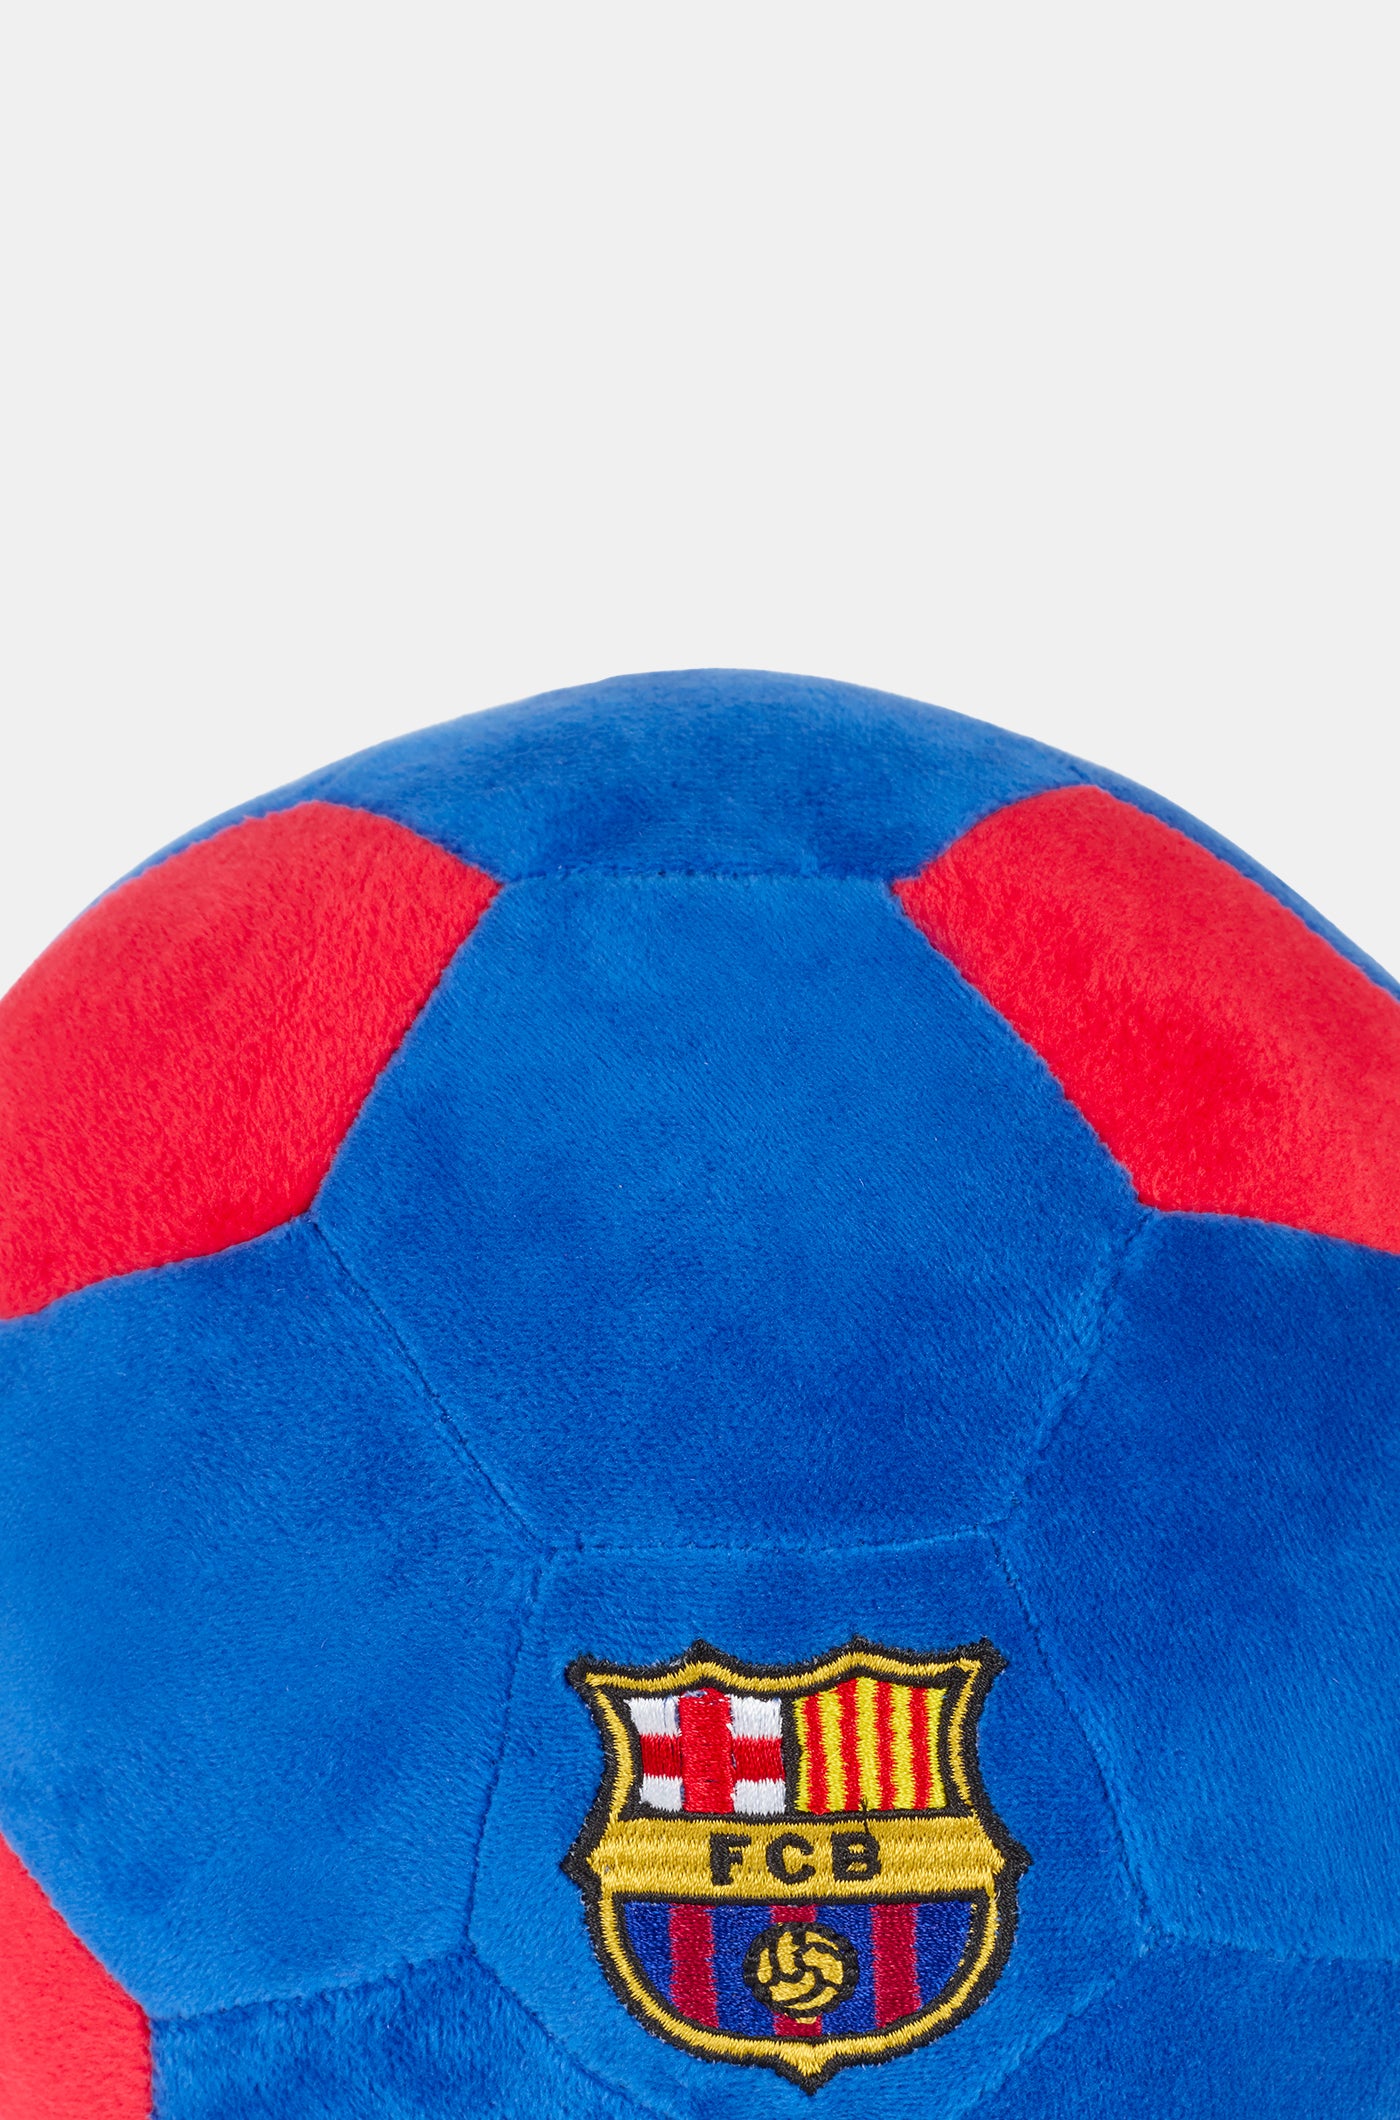 Cresty teddy ball- FC Barcelona